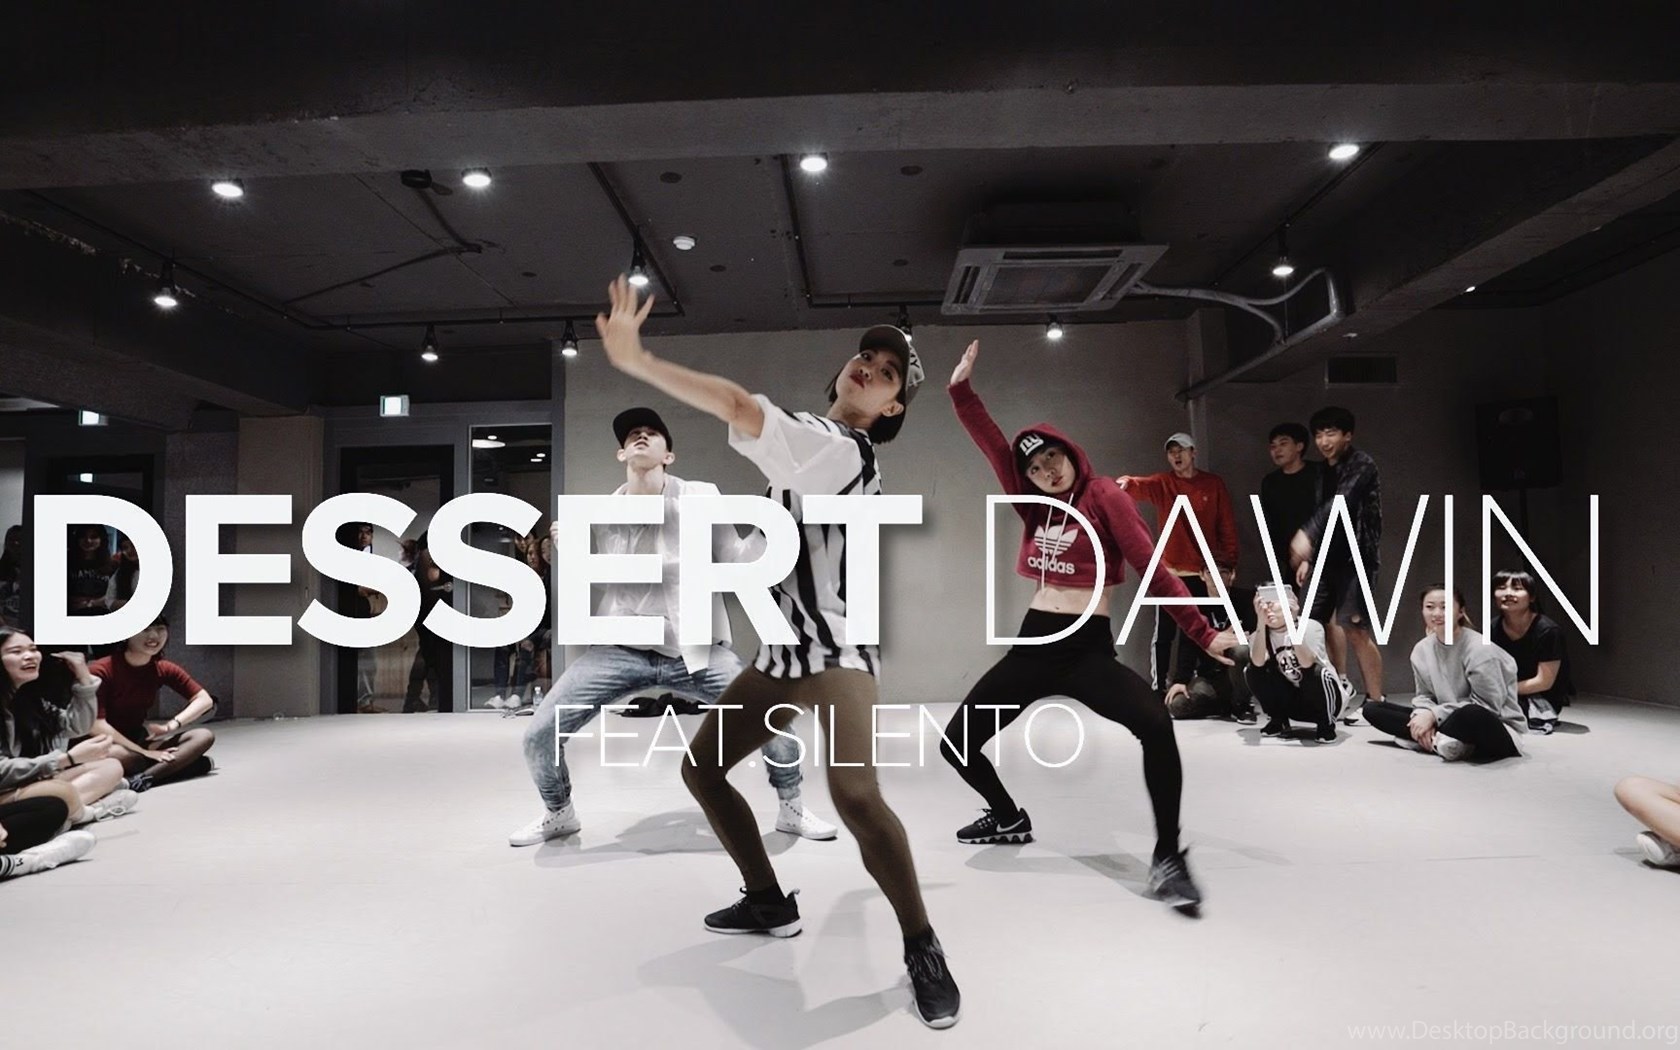 Songs In Dessert Dawin Ft.Silento / Lia Kim Choreography. Desktop Background